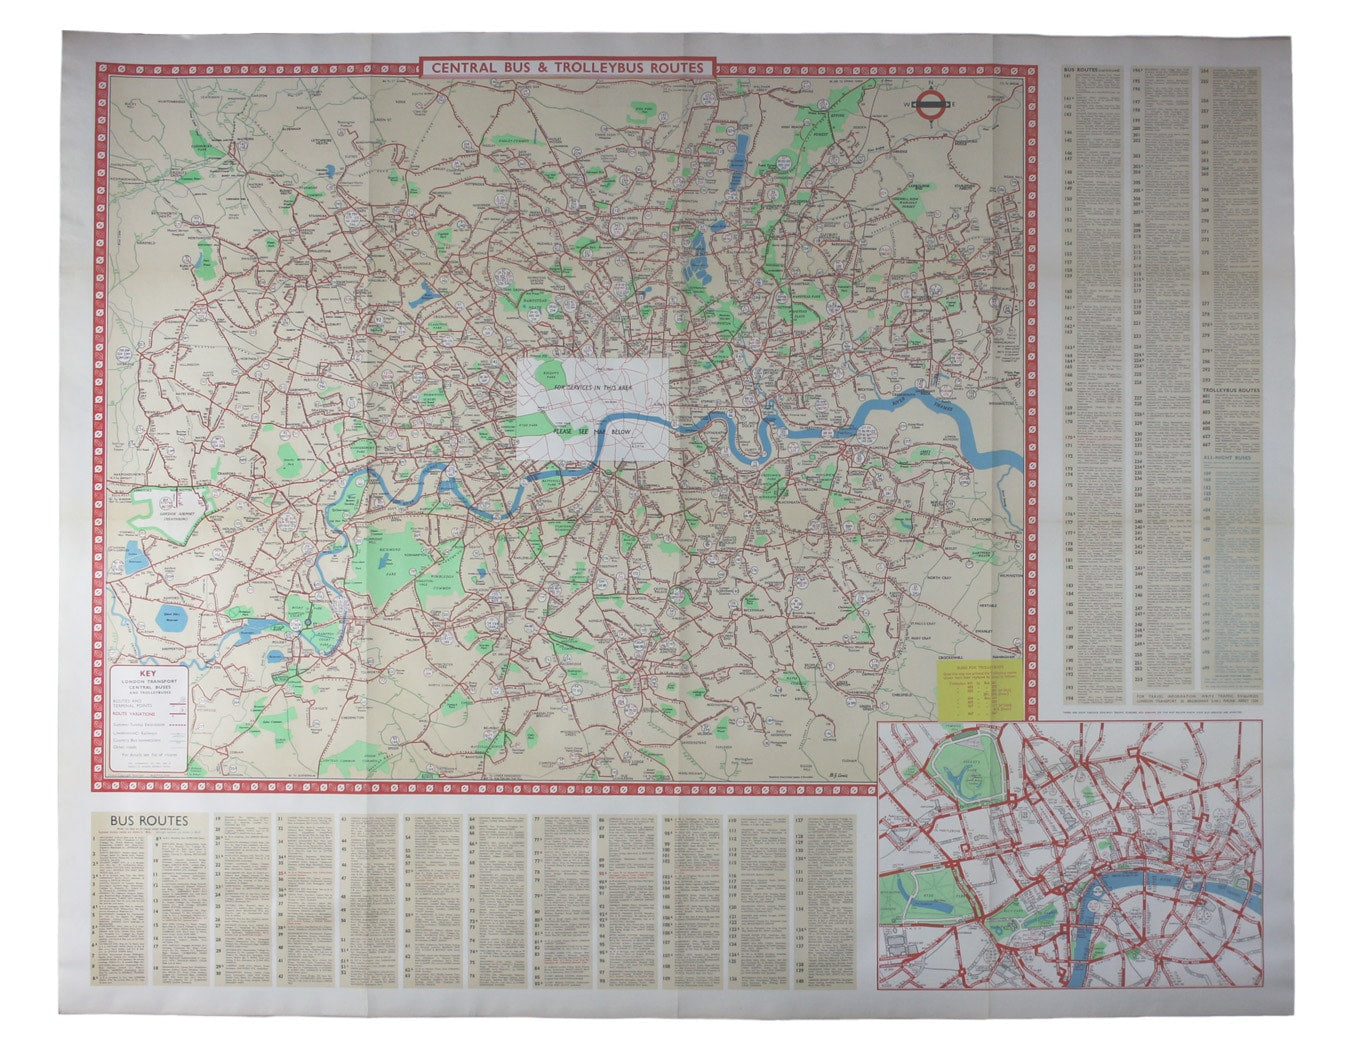 Lewis’ Quad Royal Trolleybus Map of London